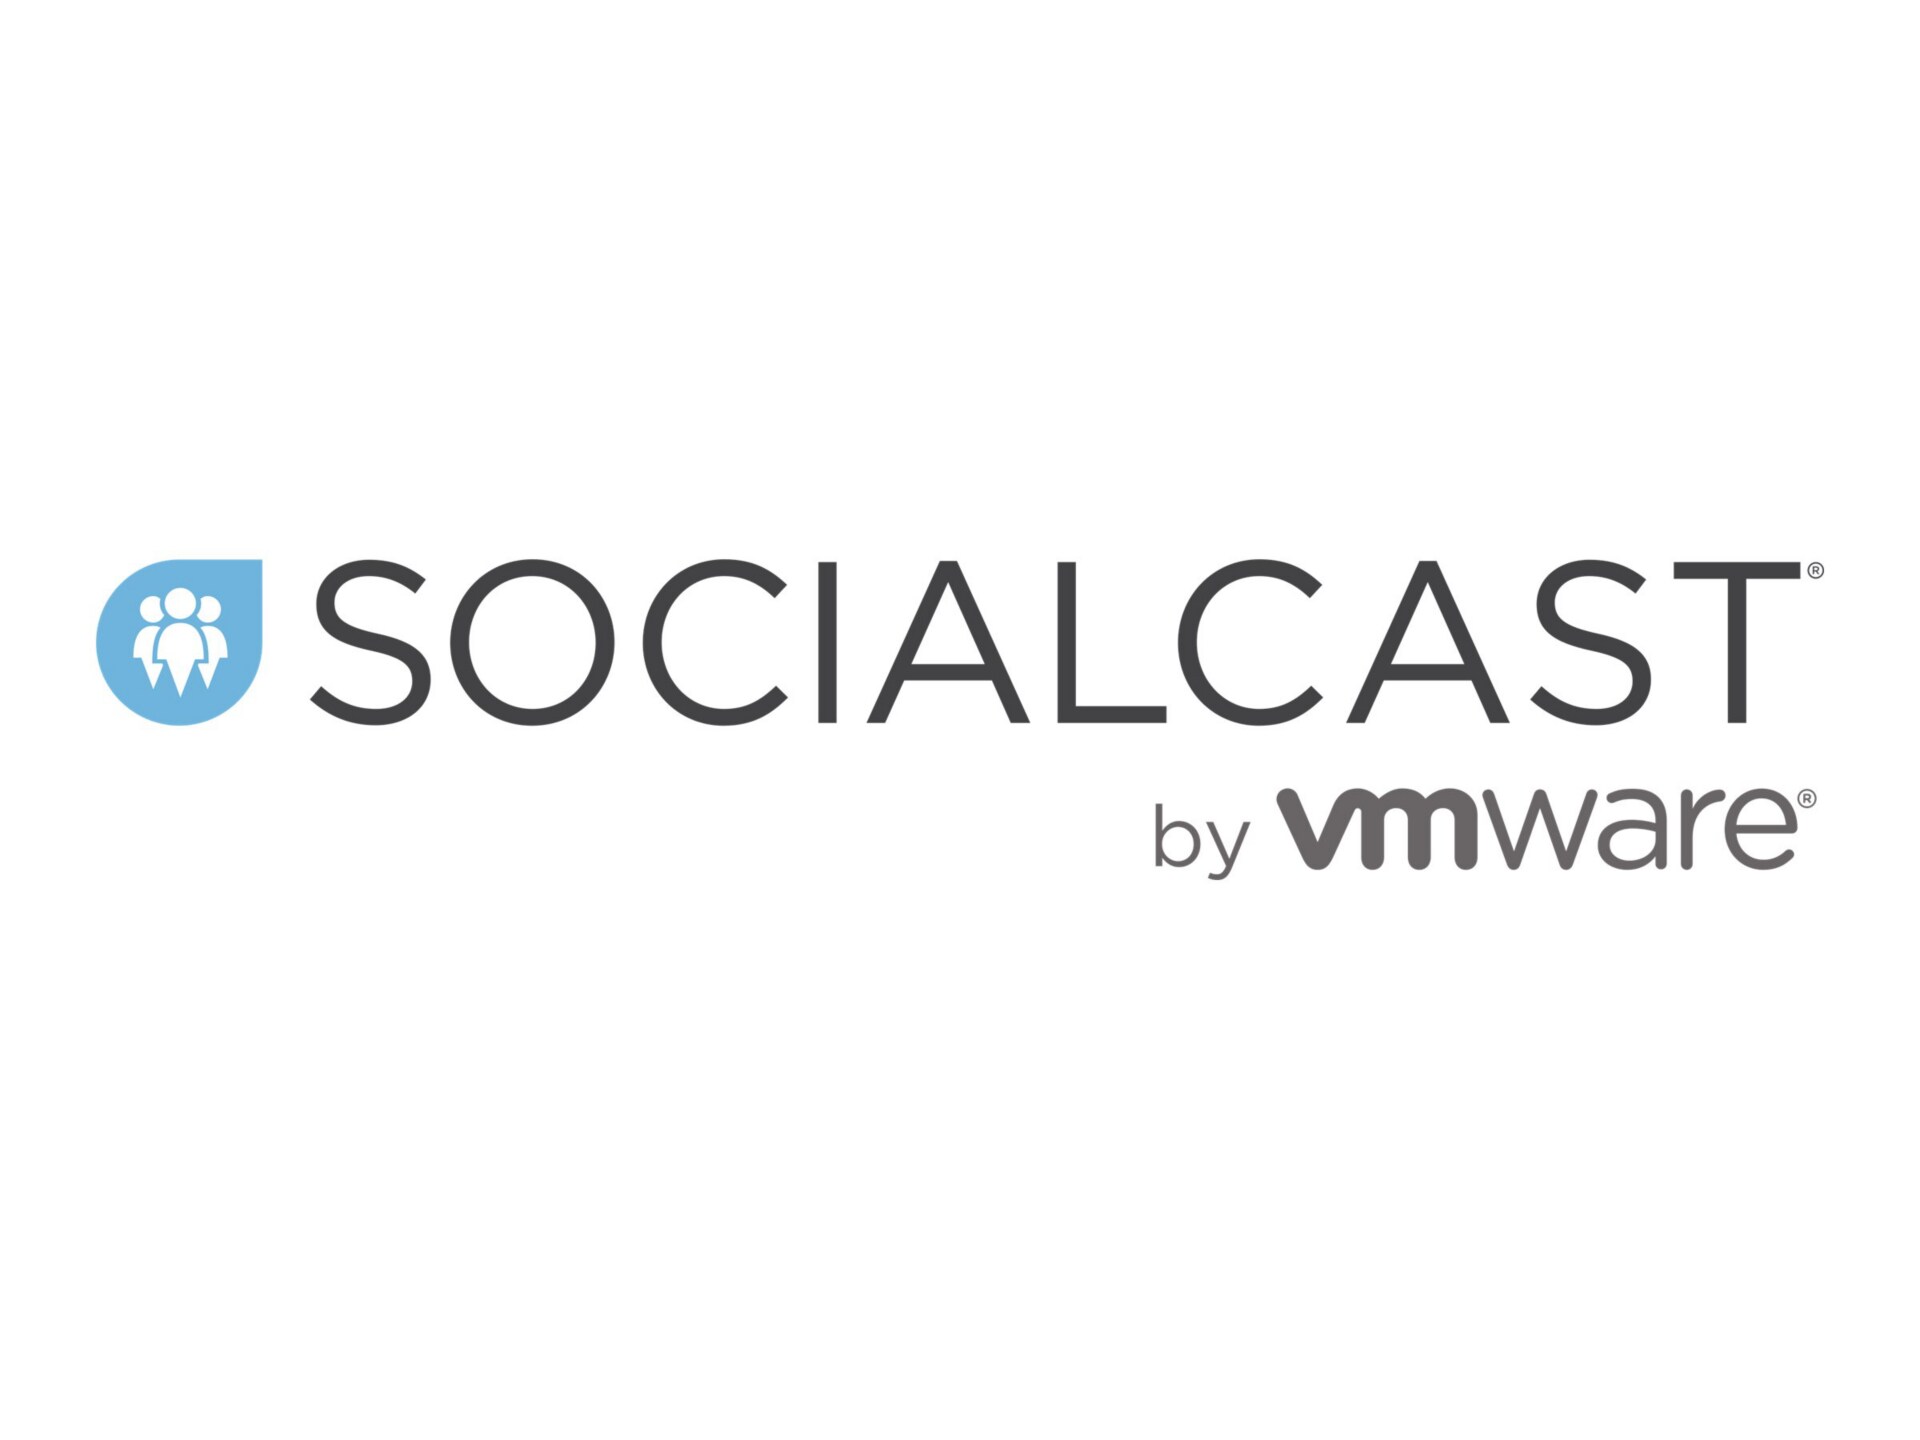 Socialcast SaaS platform - subscription license (2 years) + 2 Years VMware